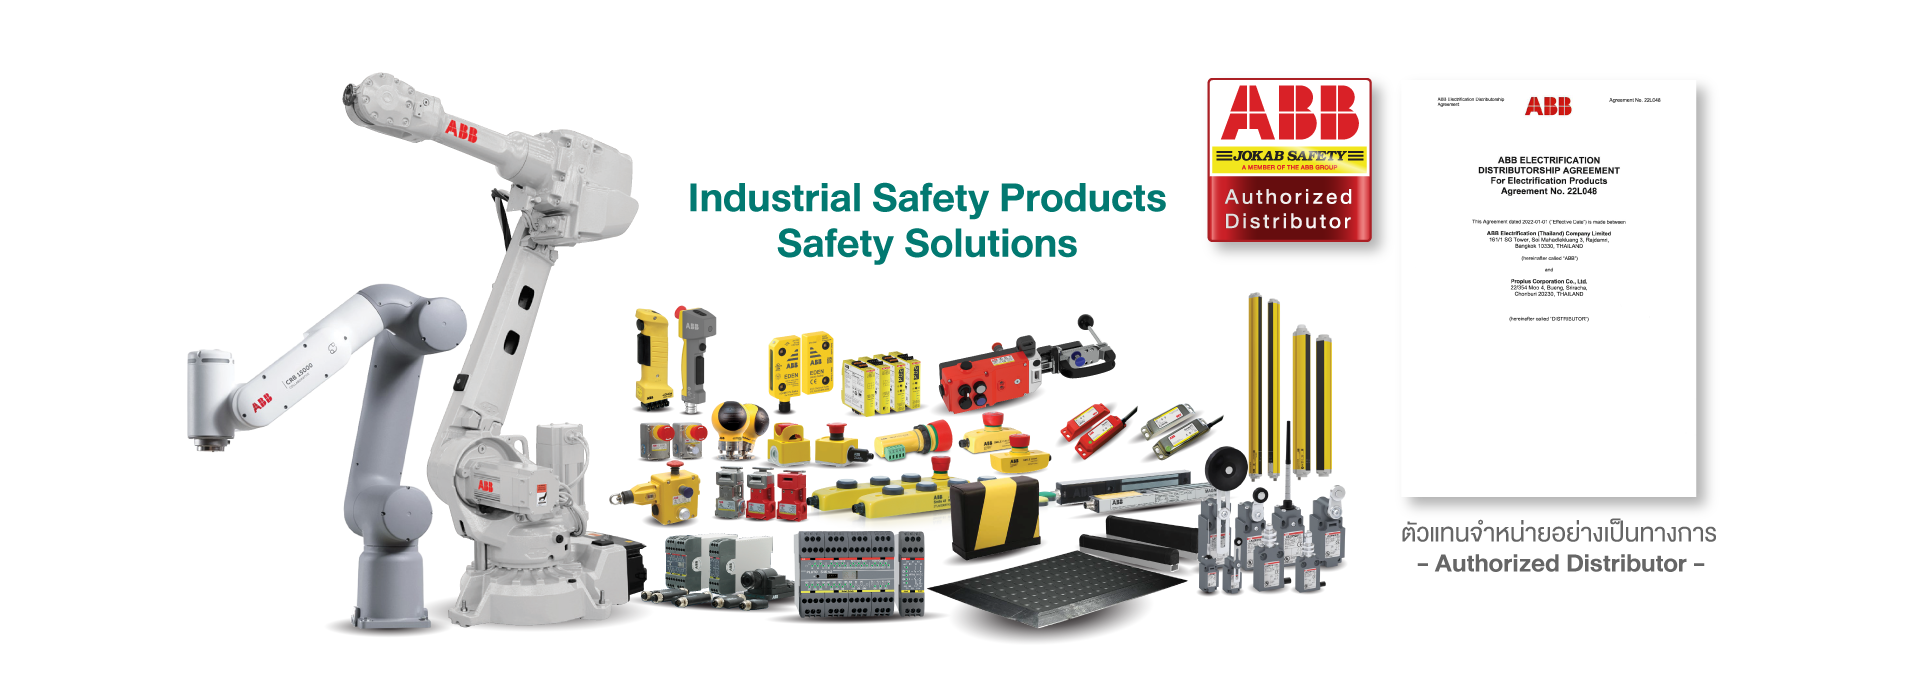 ABB-Jokab-Safety-Authorized-Distributor